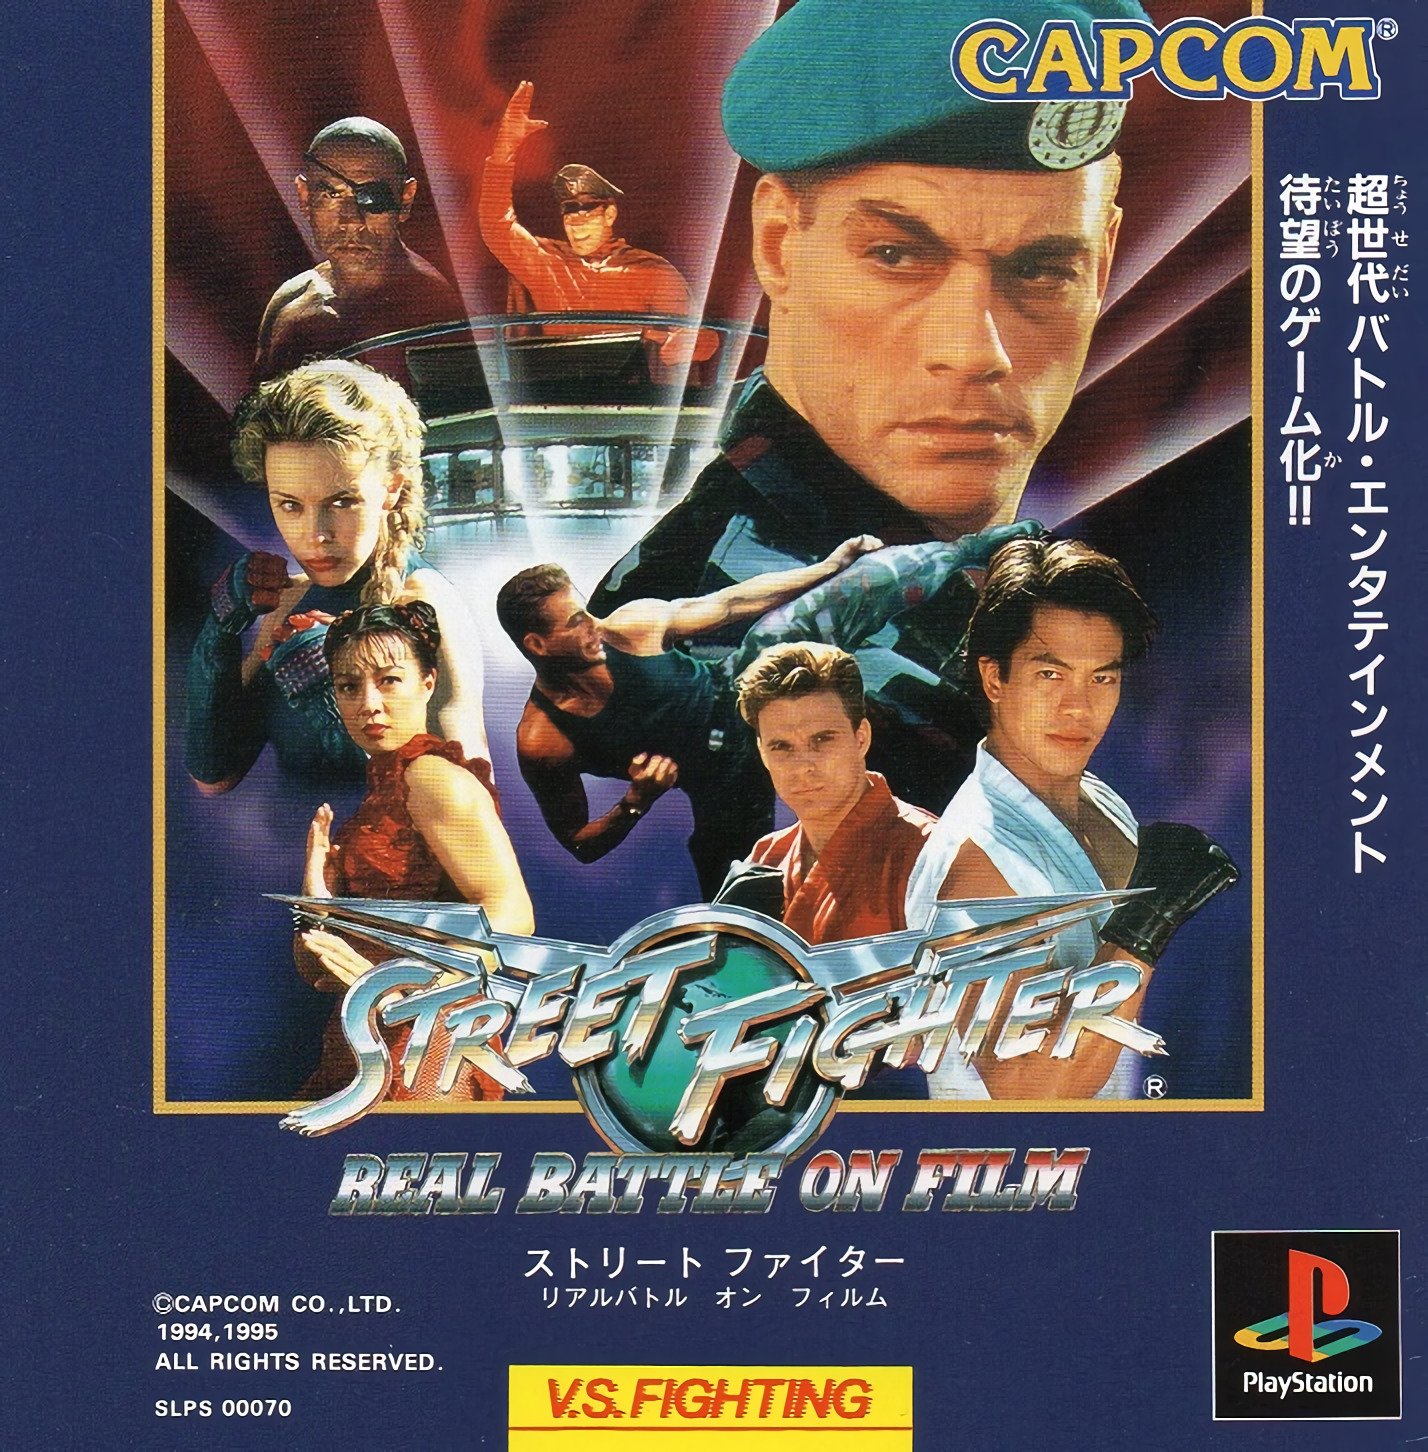 Street Fighter: Real Battle on Film